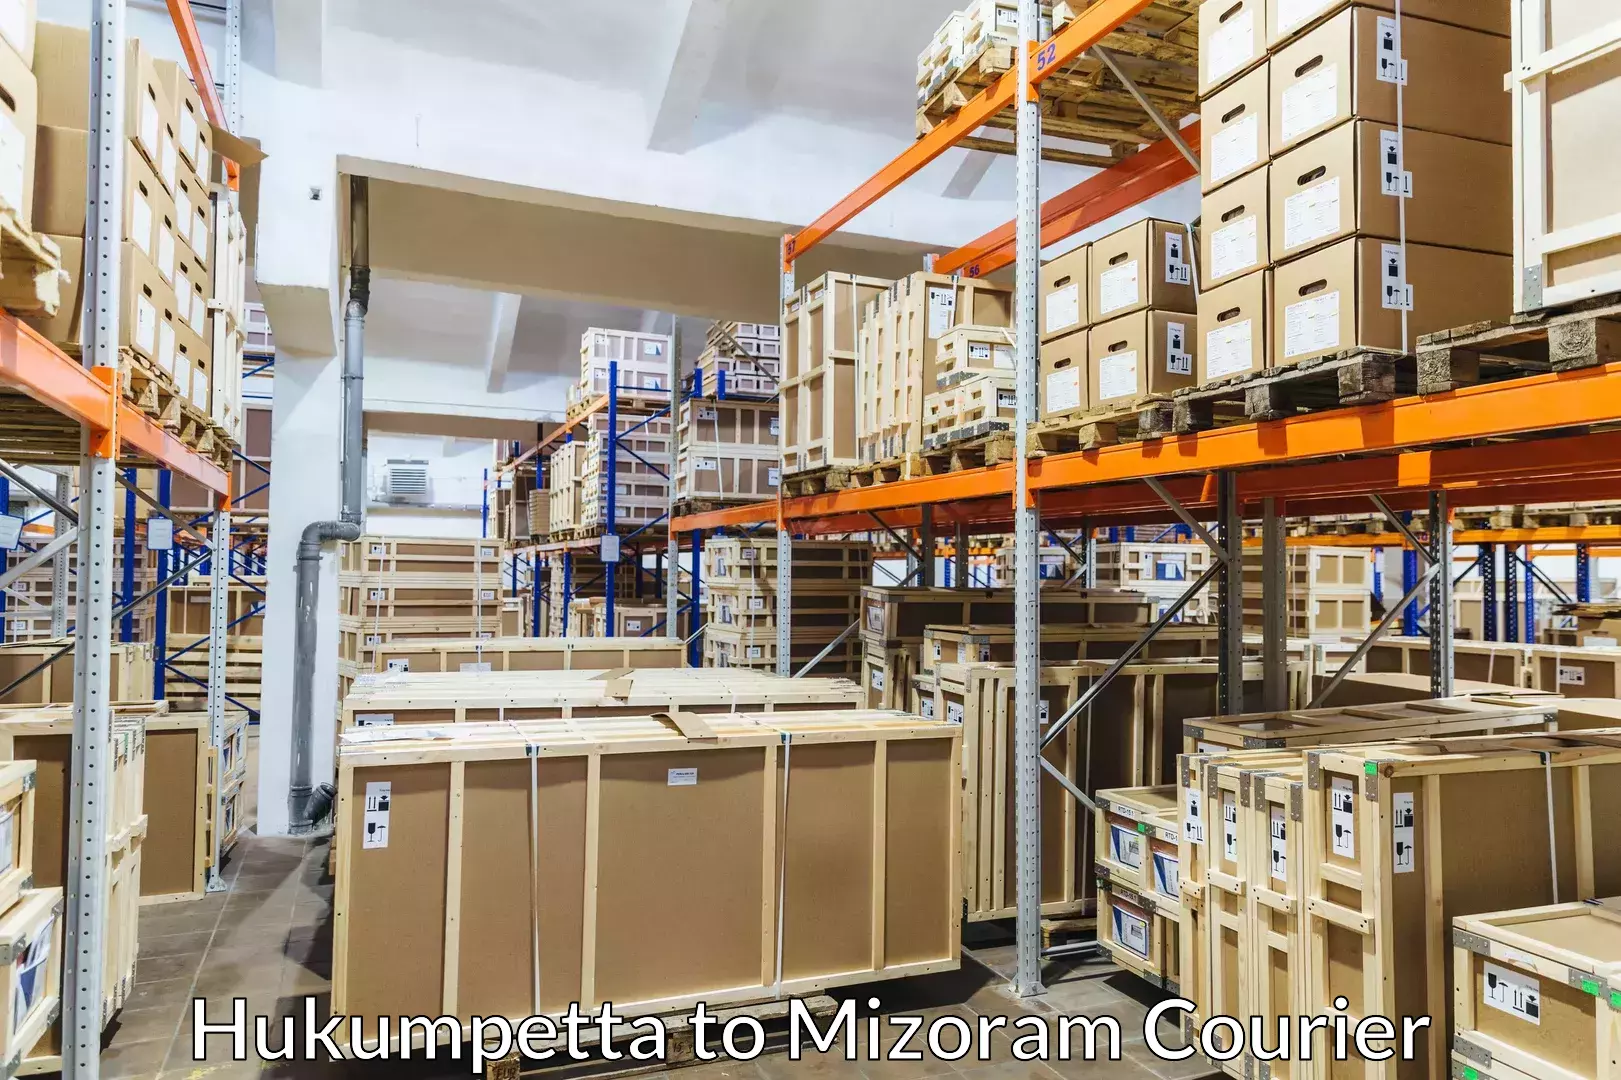 Trusted moving company Hukumpetta to Mizoram